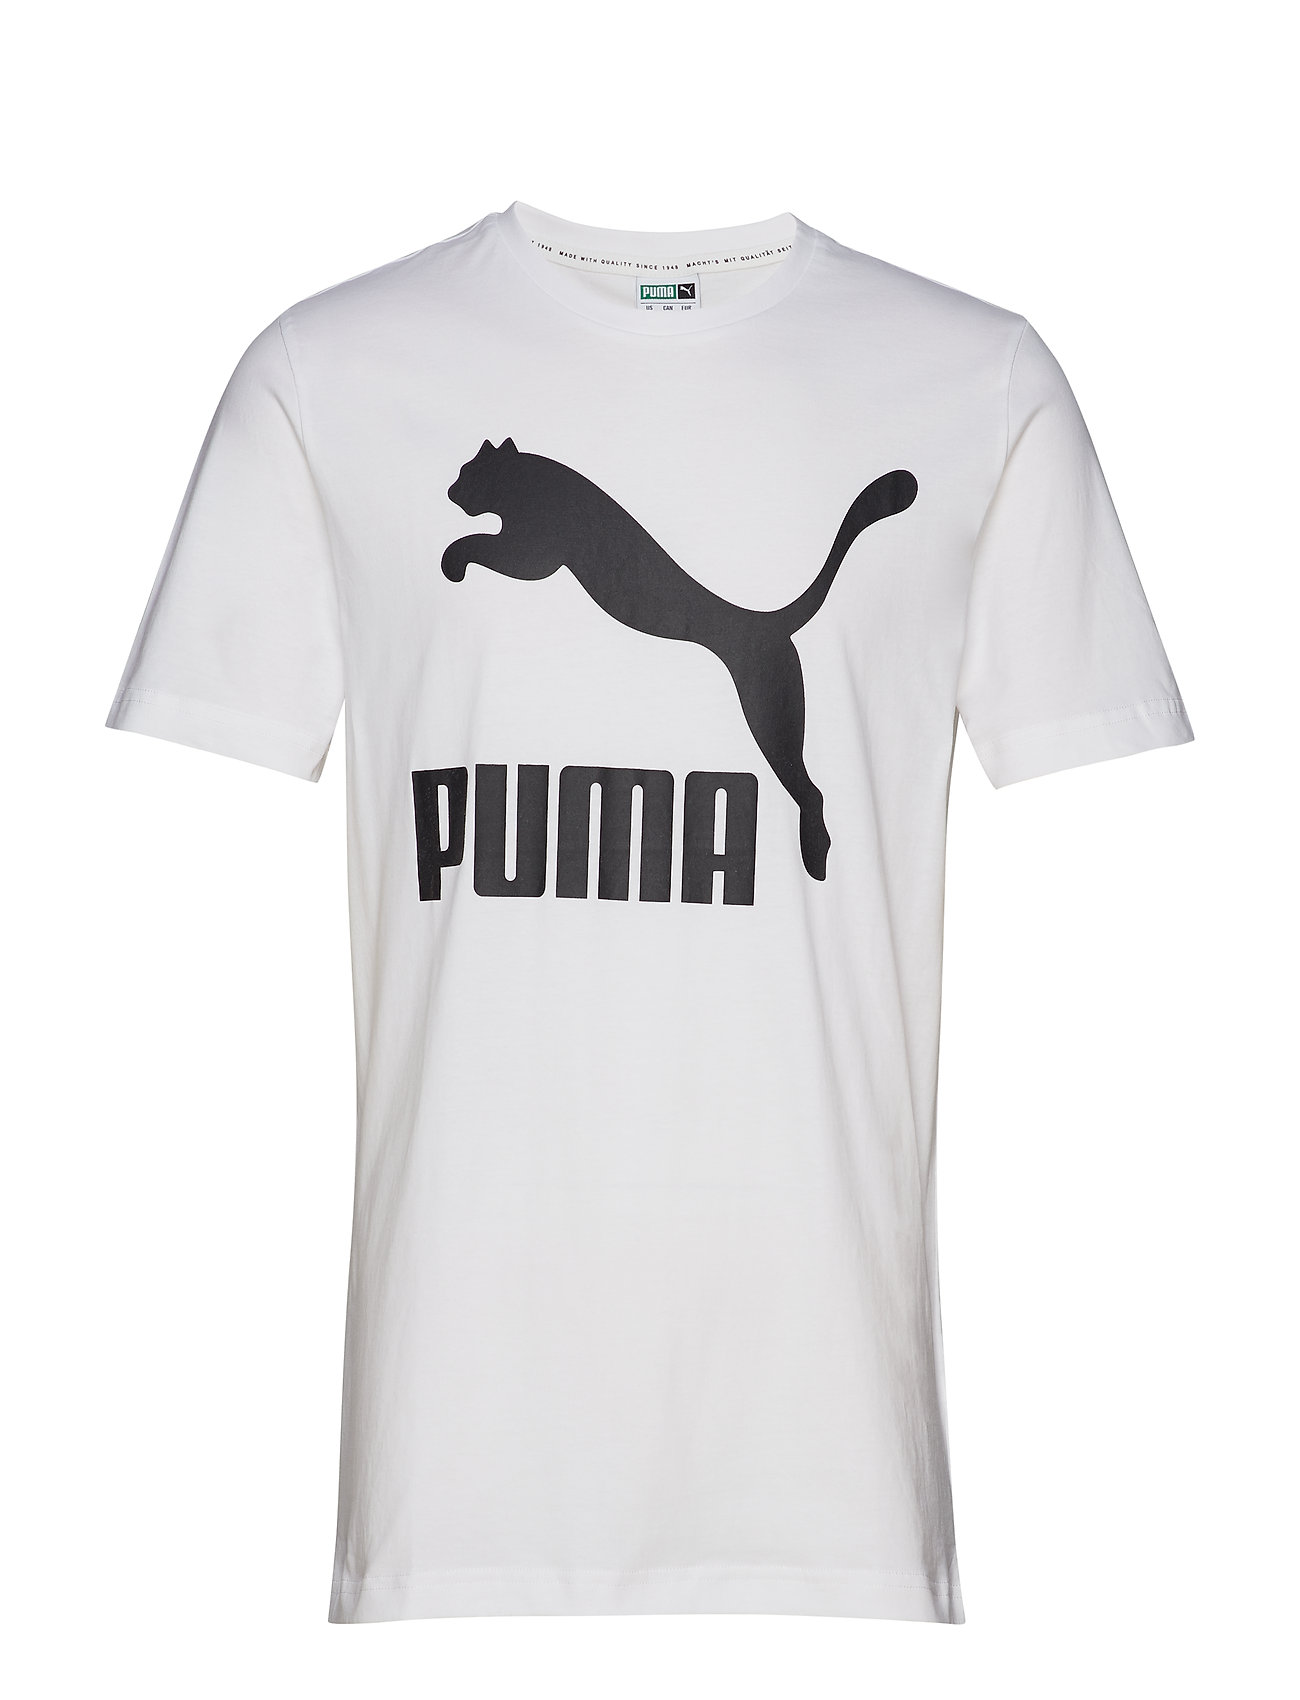 puma classic logo tee